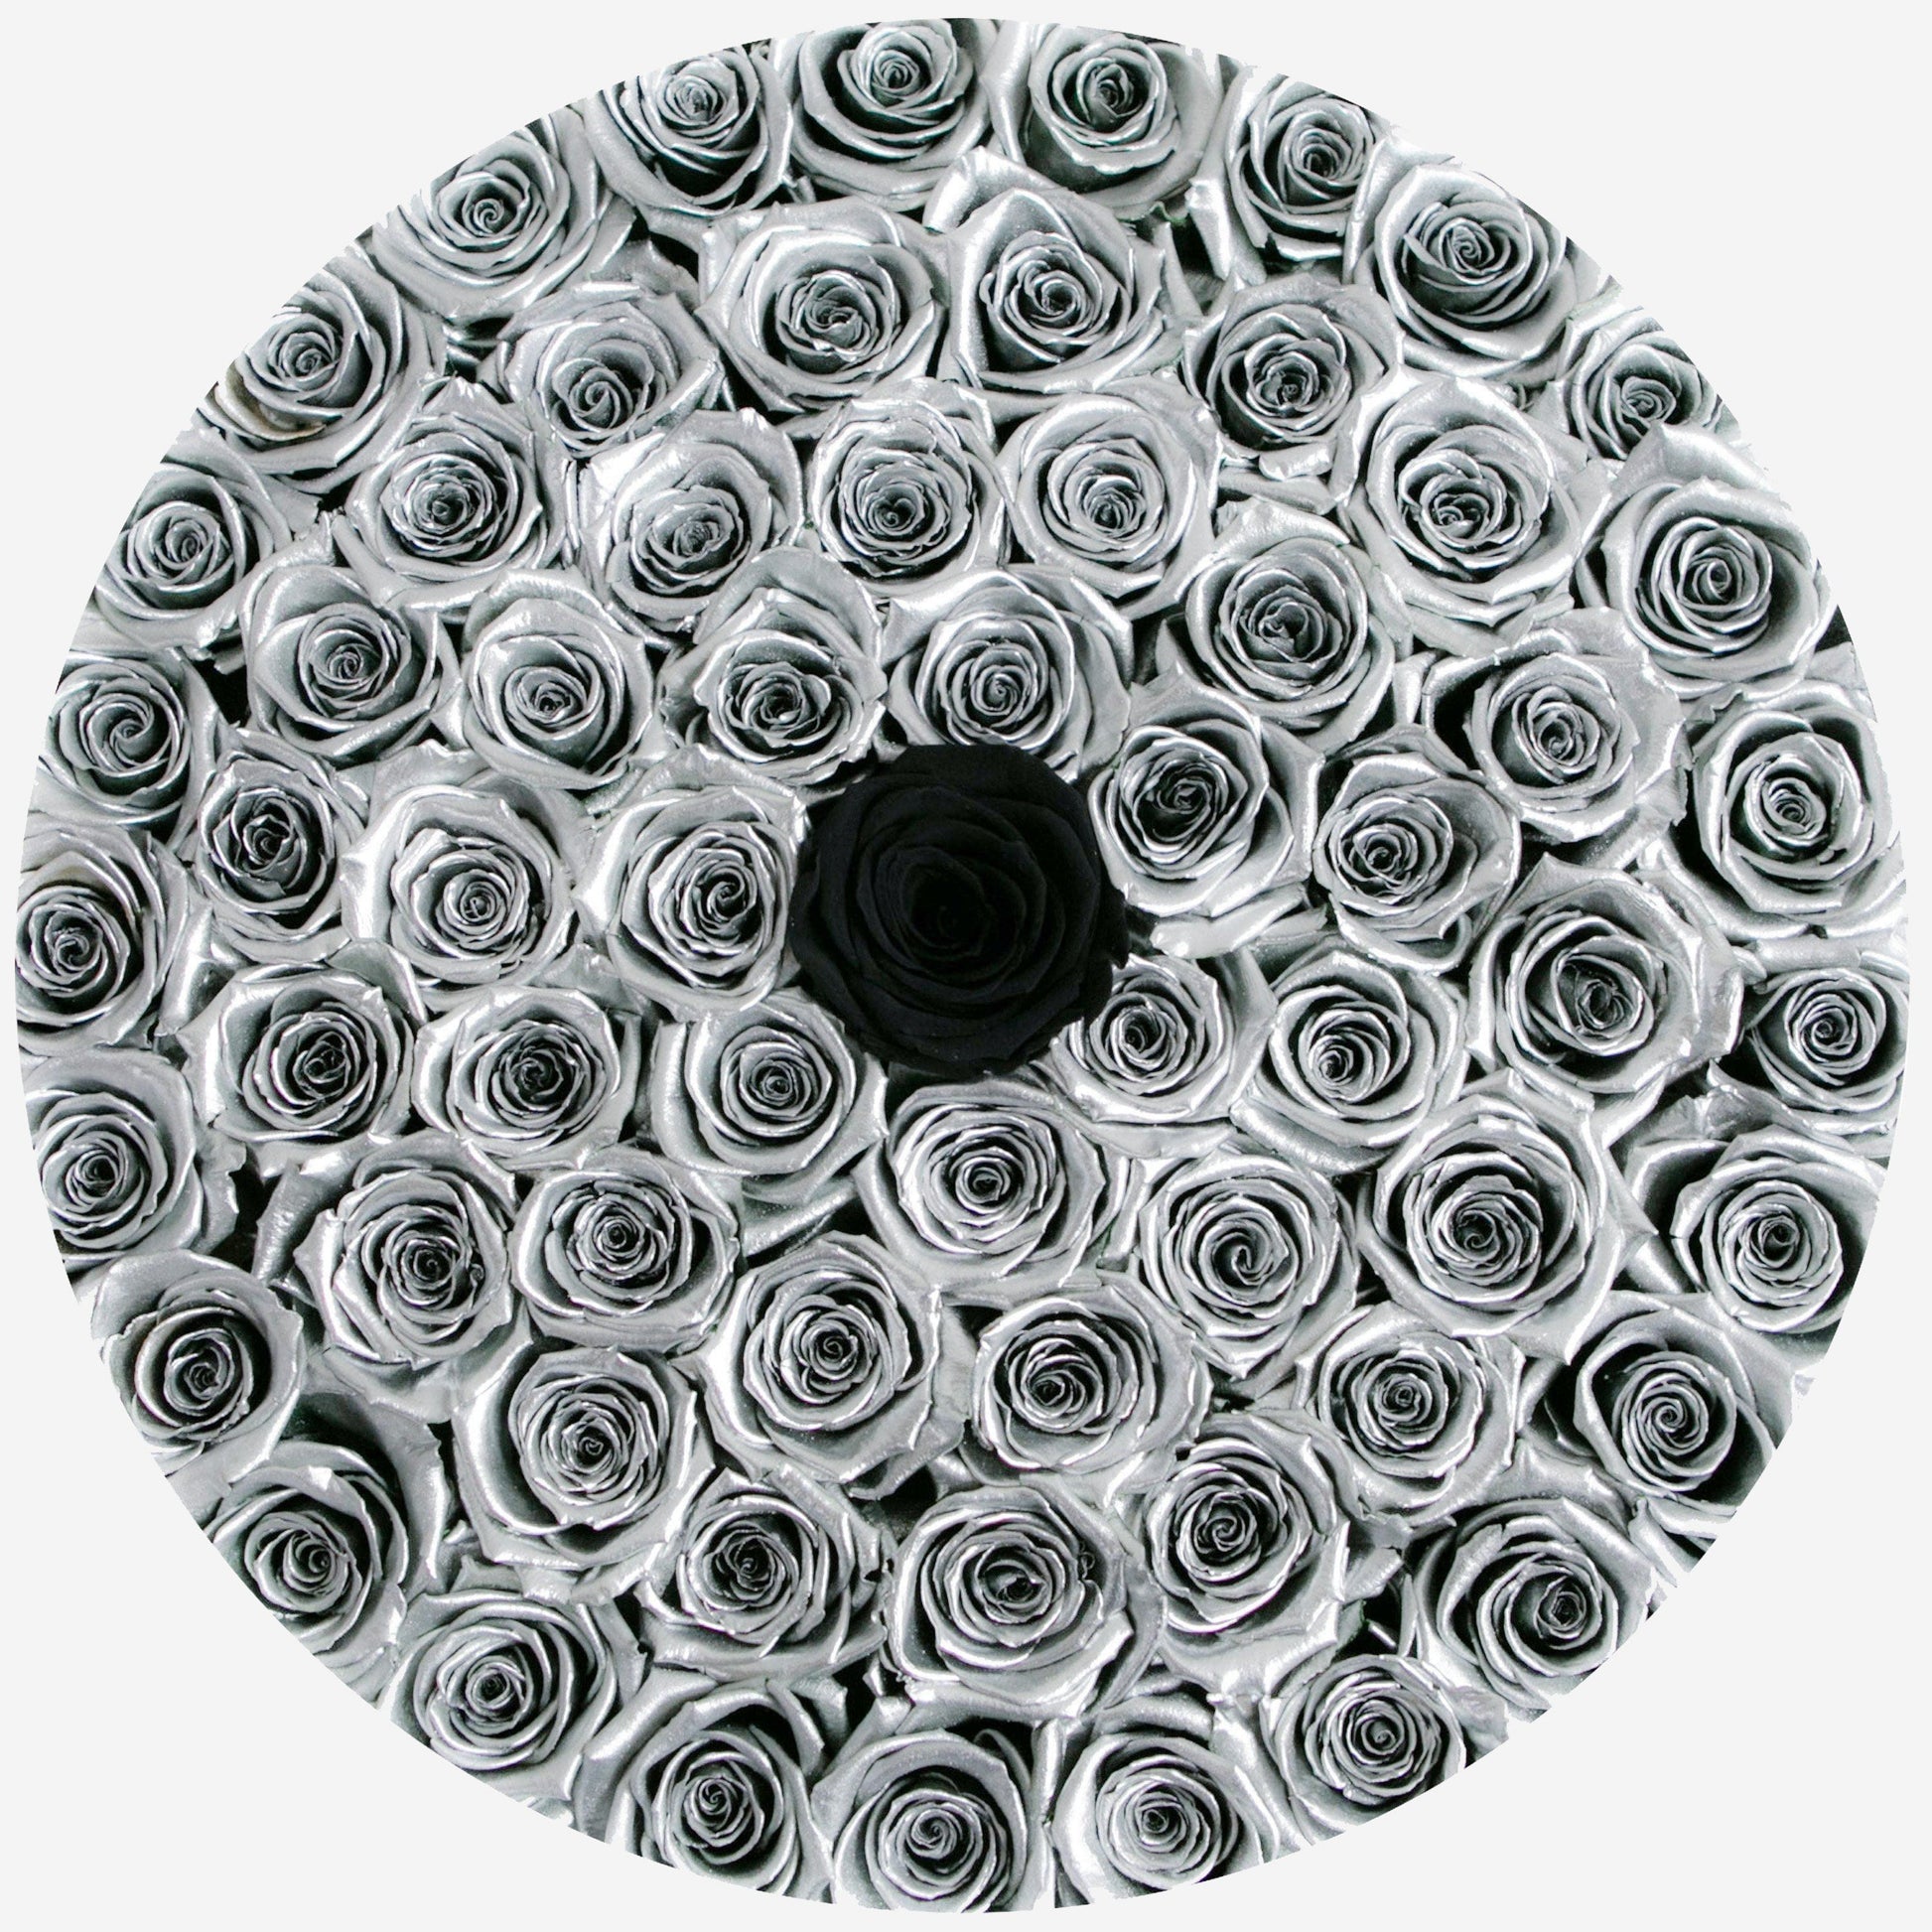 Deluxe White Box | Silver & Black Roses - The Million Roses